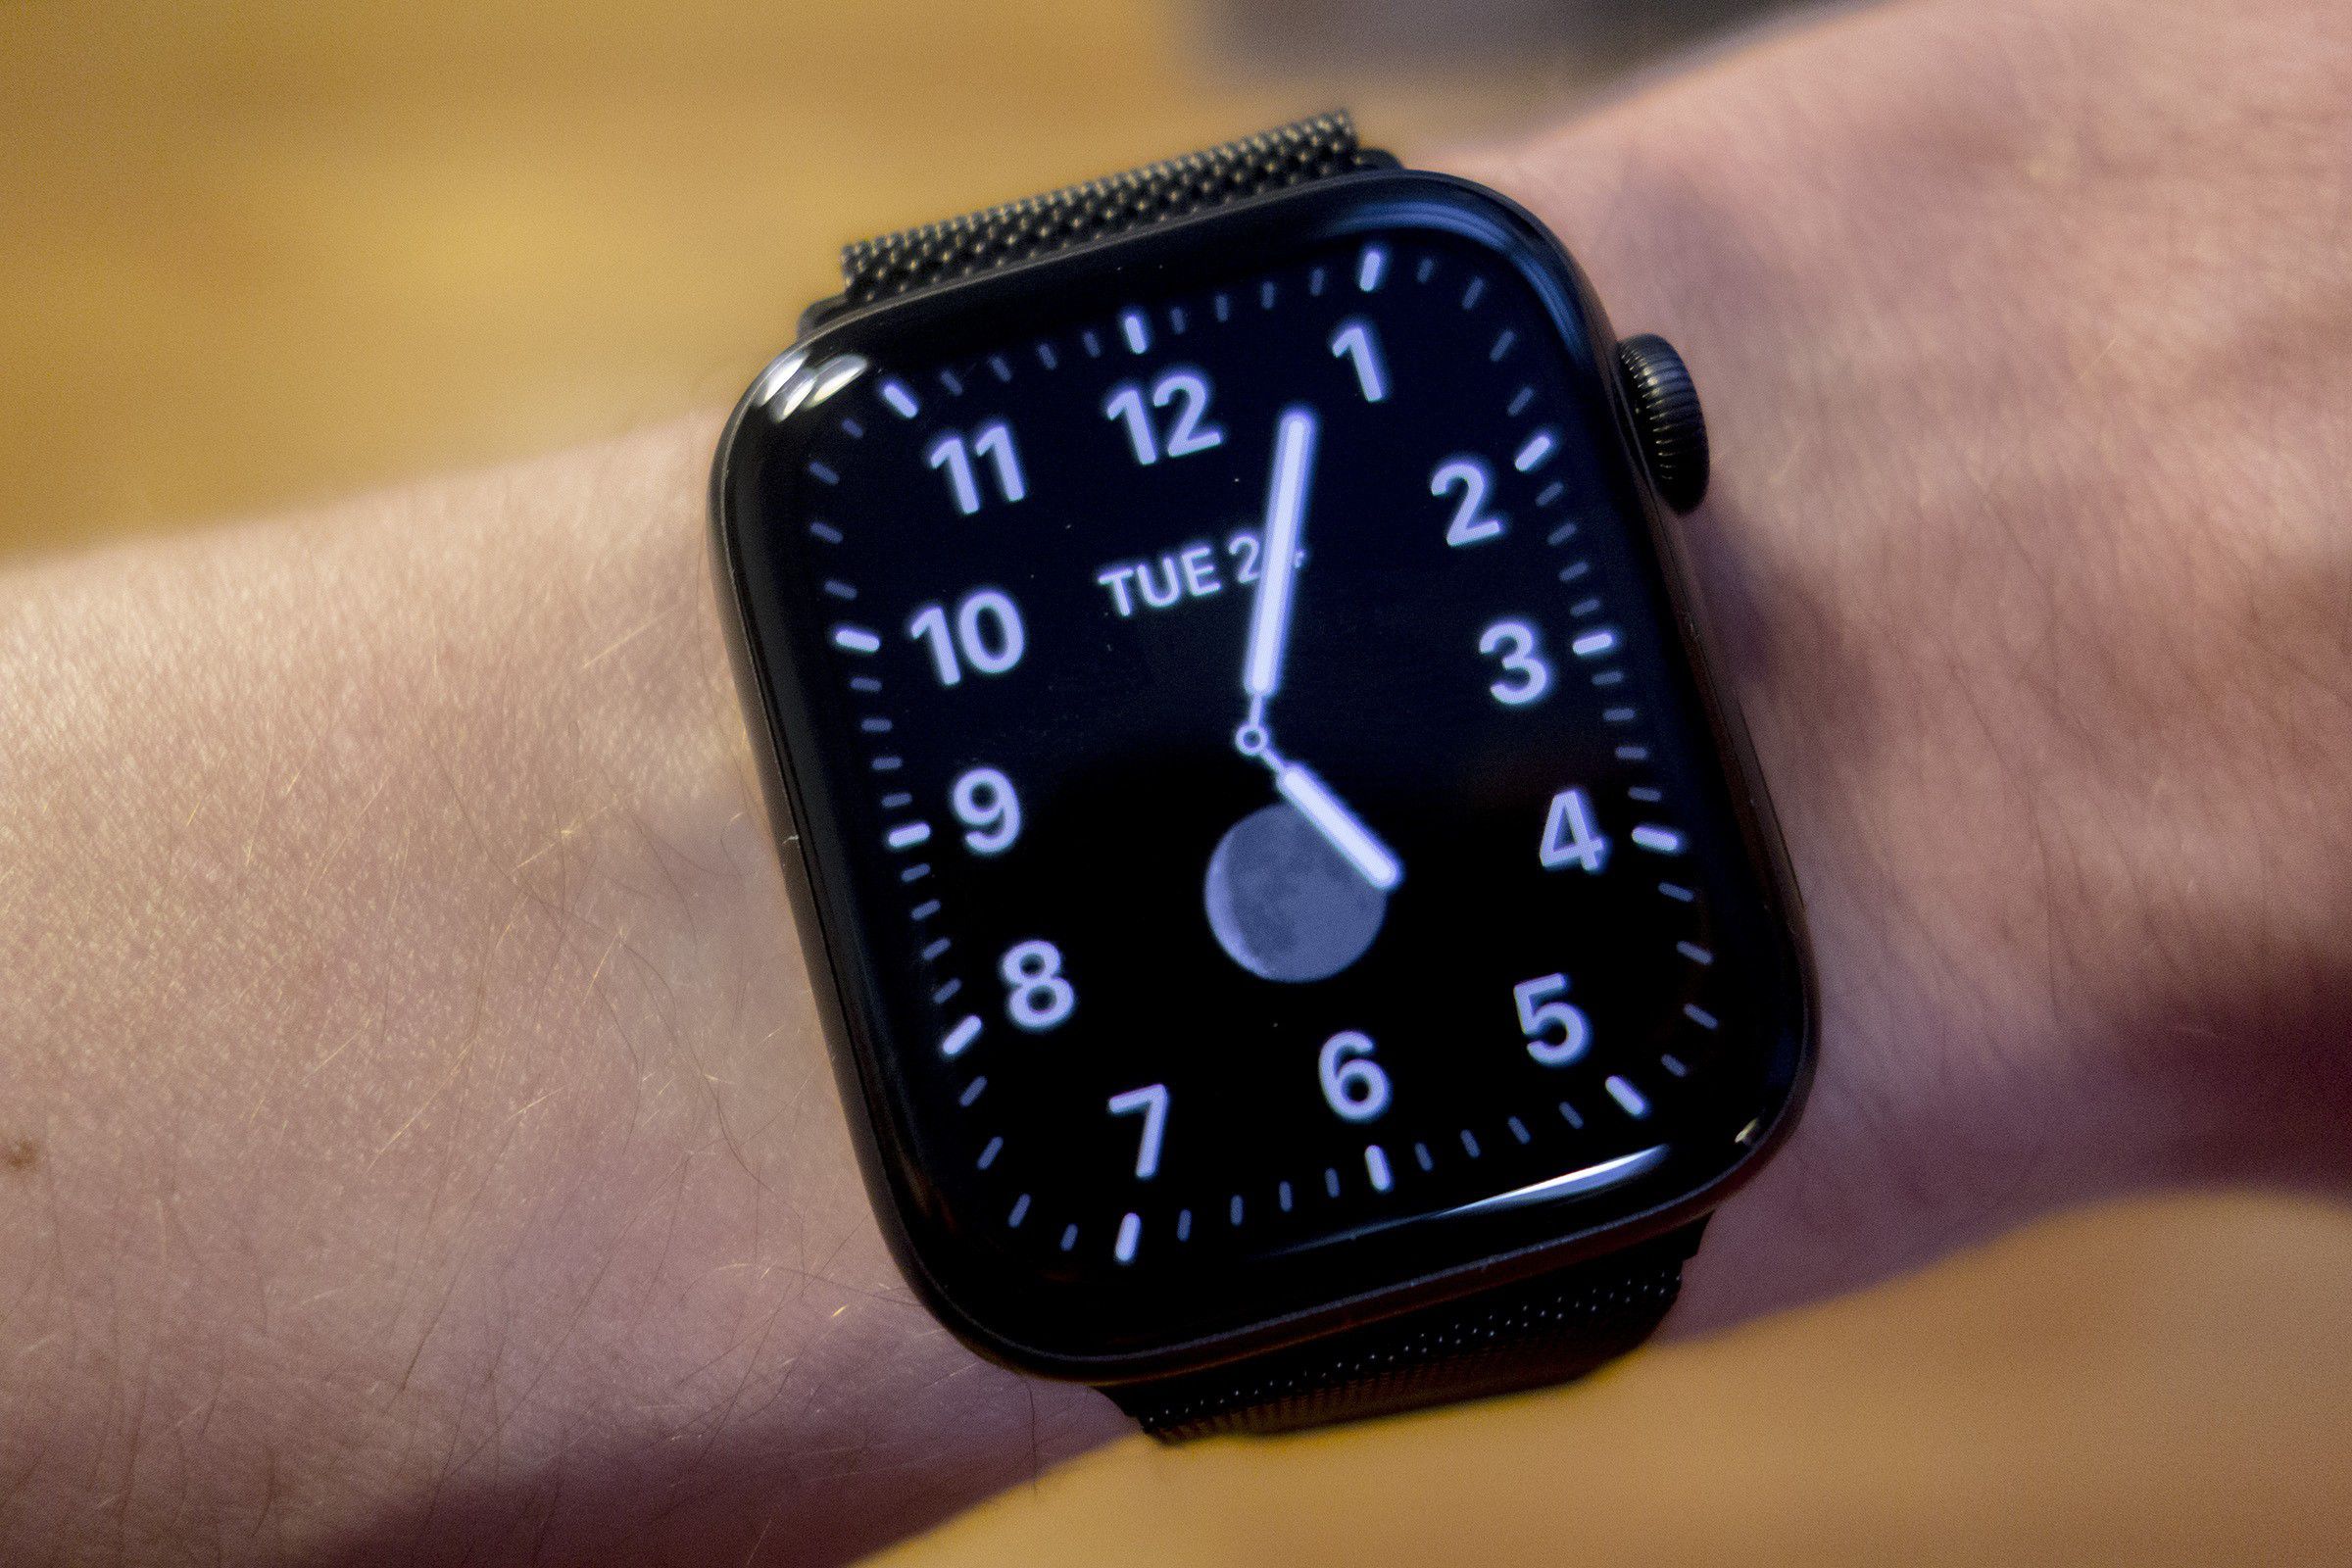 Часы watch 7 pro. Watchface Apple watch 7. Циферблат Эппл вотч 7. Циферблат АПЛ вотч 7. Циферблаты Apple watch Series 7.